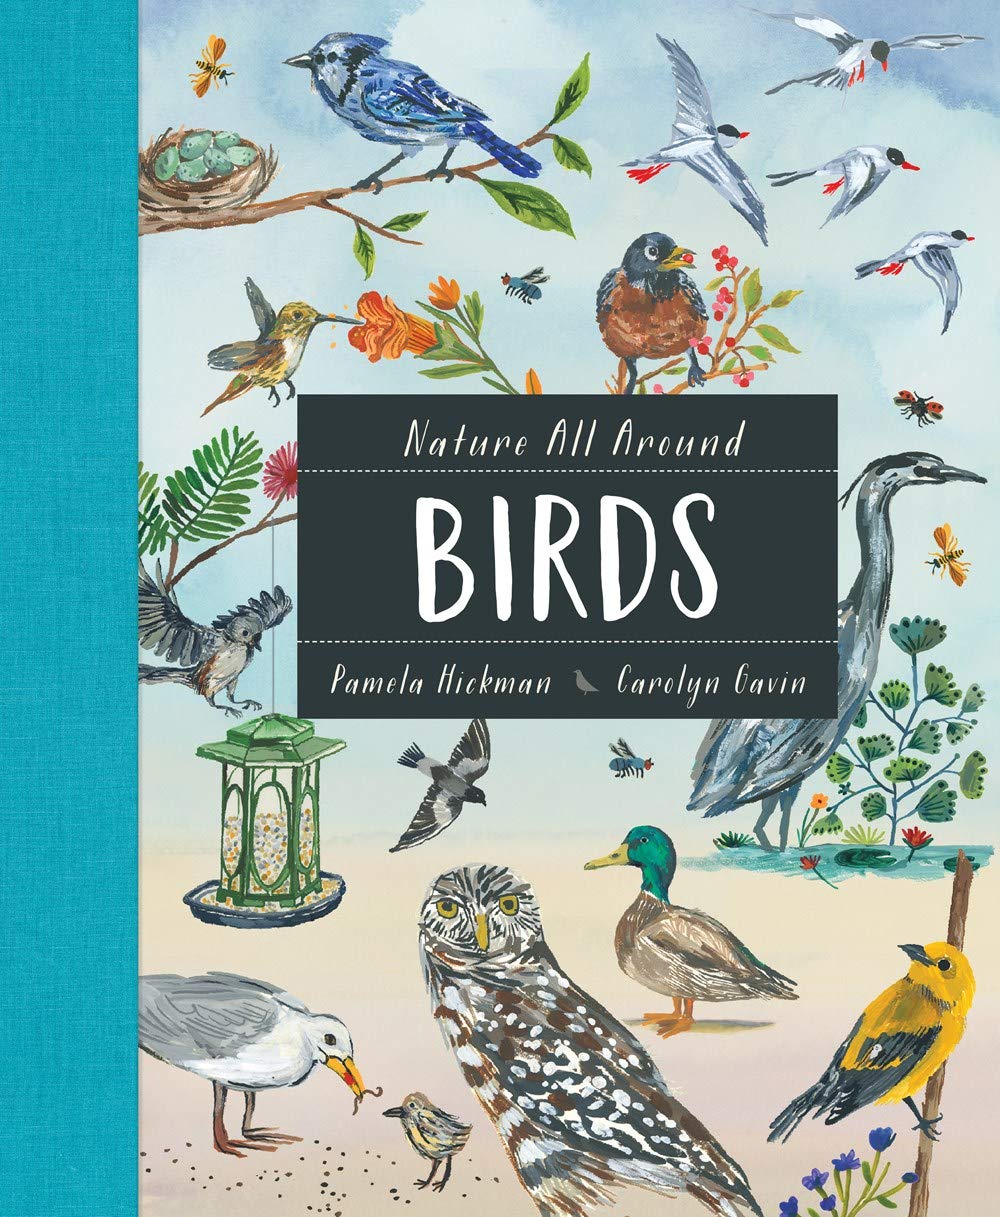 Nature All Around - Birds - Pamela Hickman